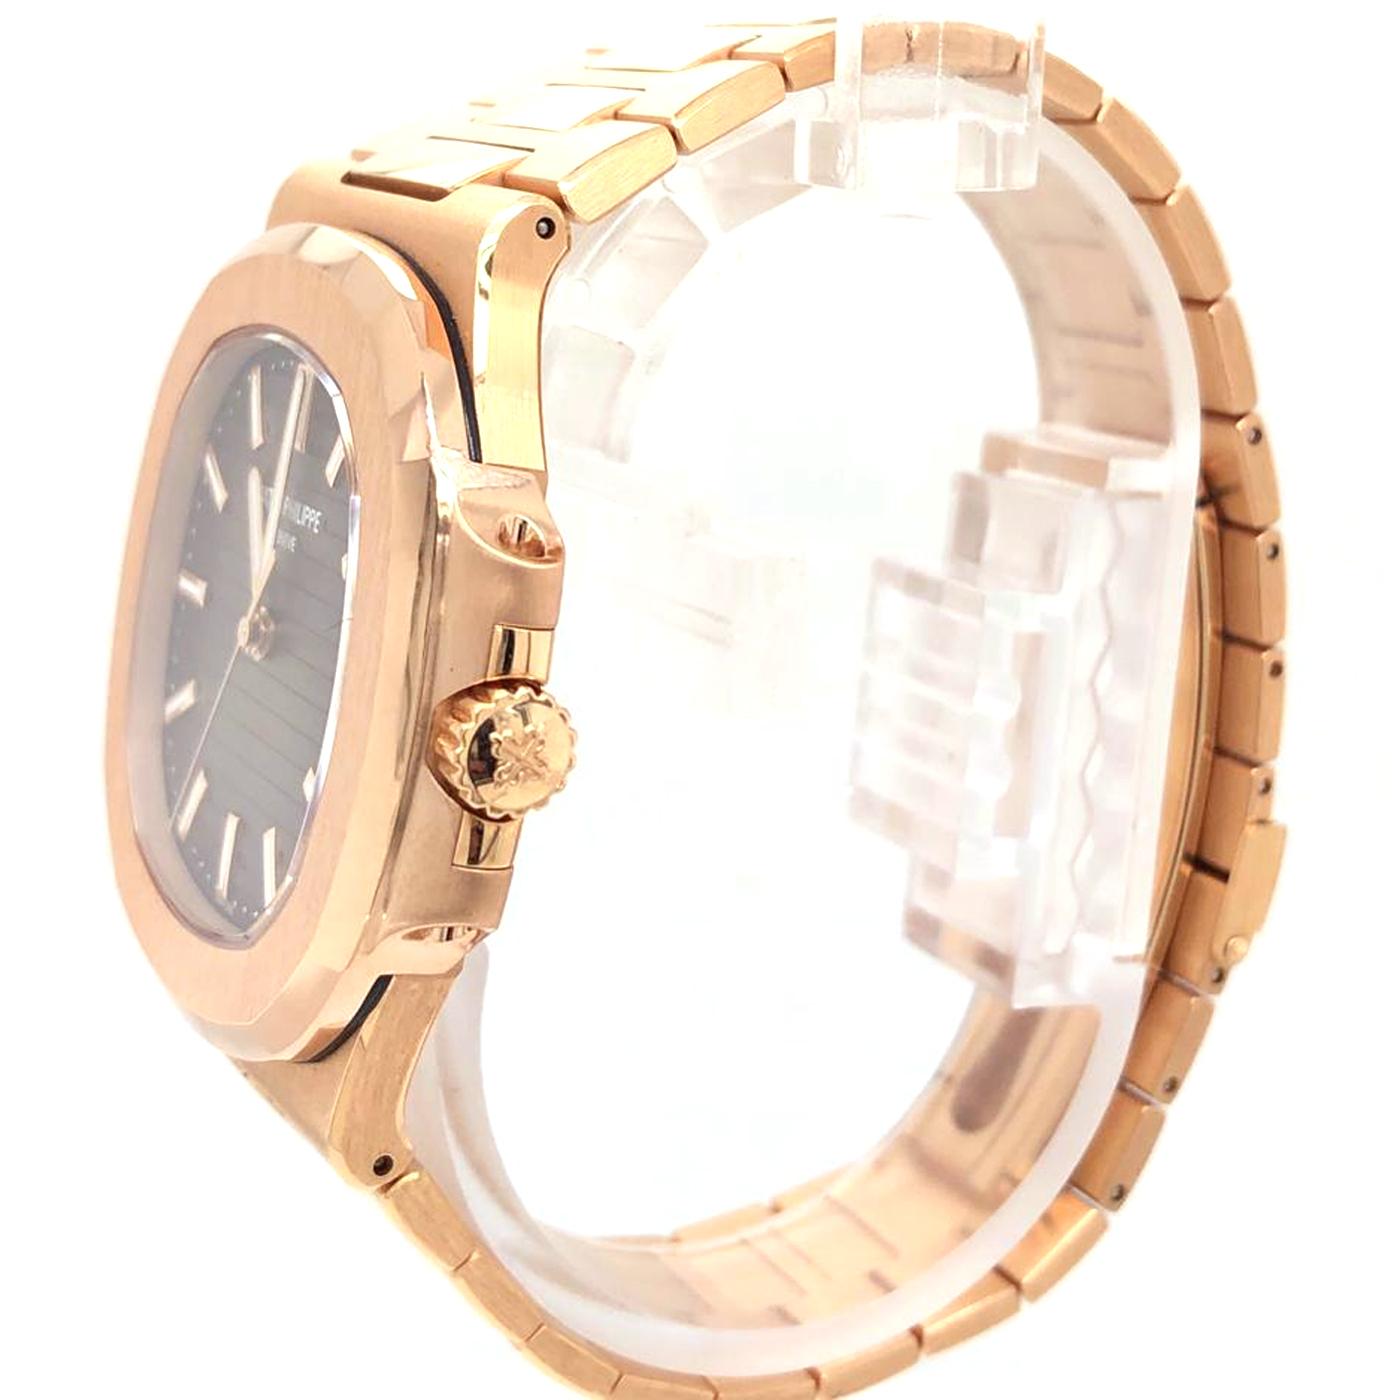 Patek Philippe Nautilus 18K Rose Gold Automatic Men's Watch 5711/1R-001 For Sale 1